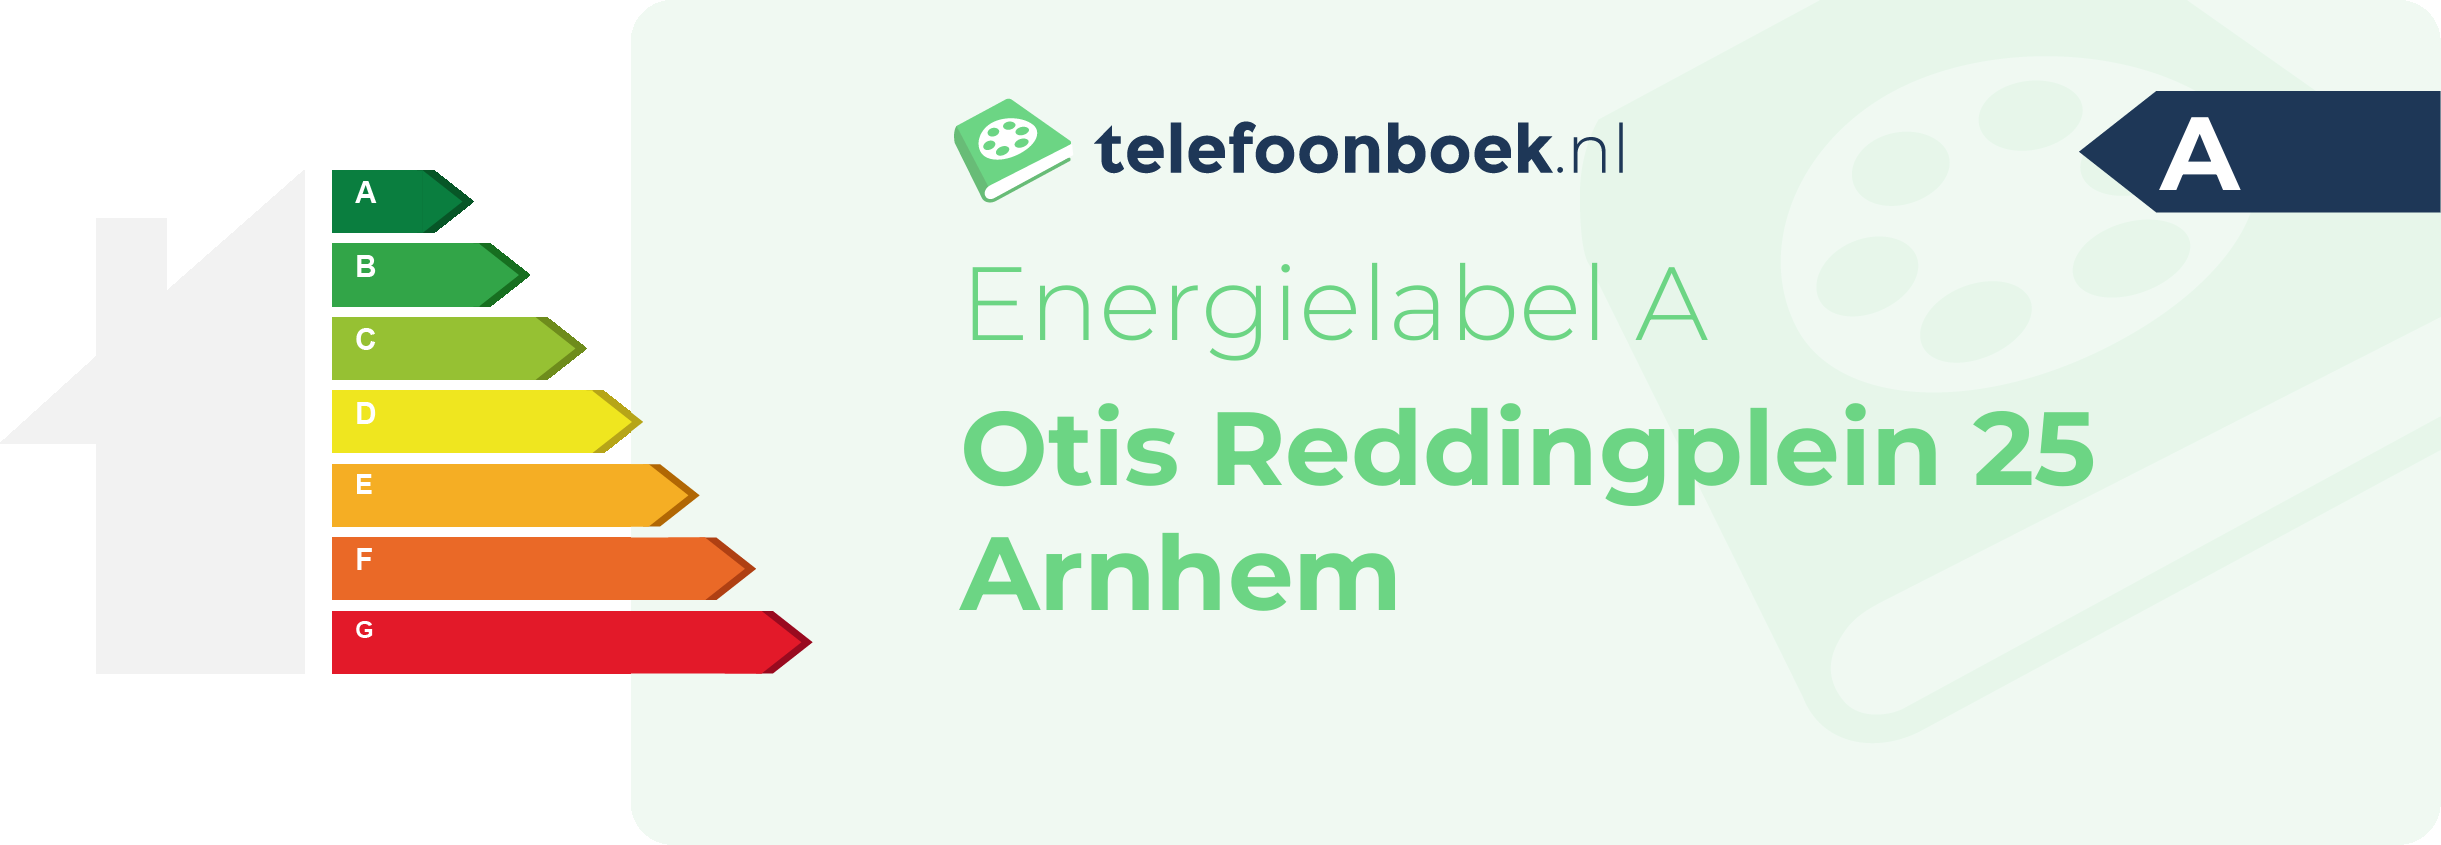 Energielabel Otis Reddingplein 25 Arnhem